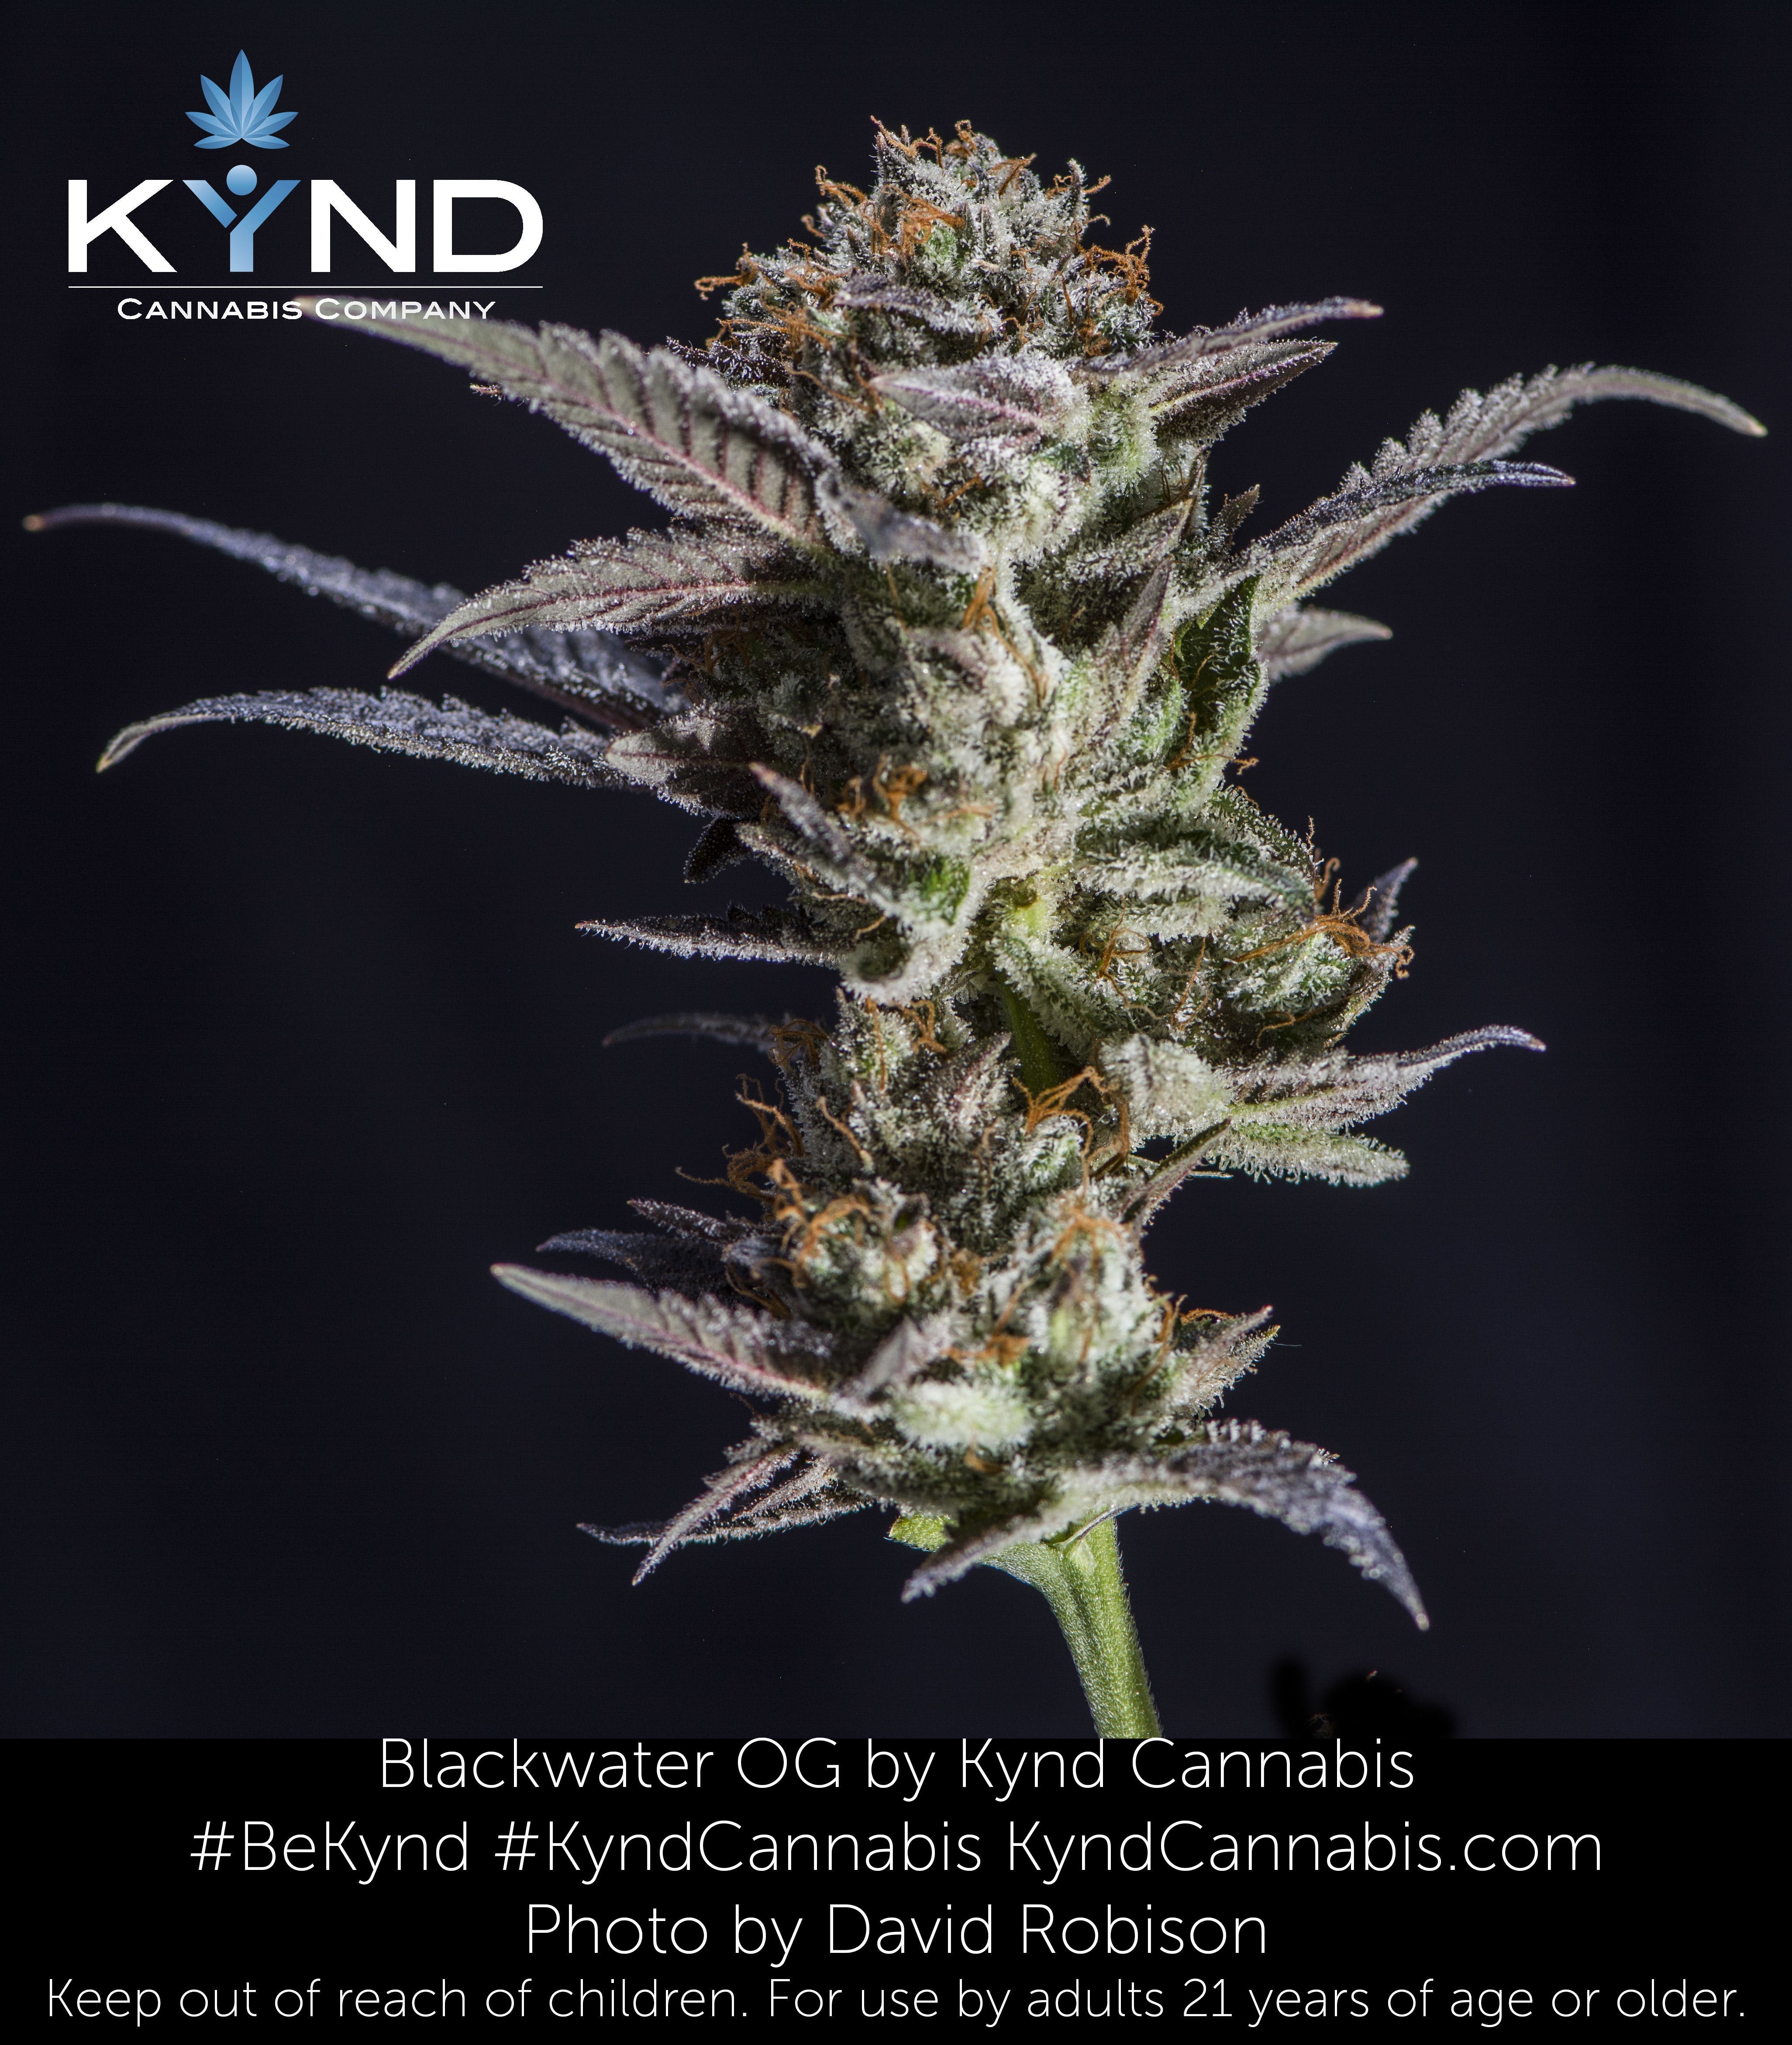 marijuana-dispensaries-mynt-cannabis-reno-north-in-reno-blackwater-og-kynd